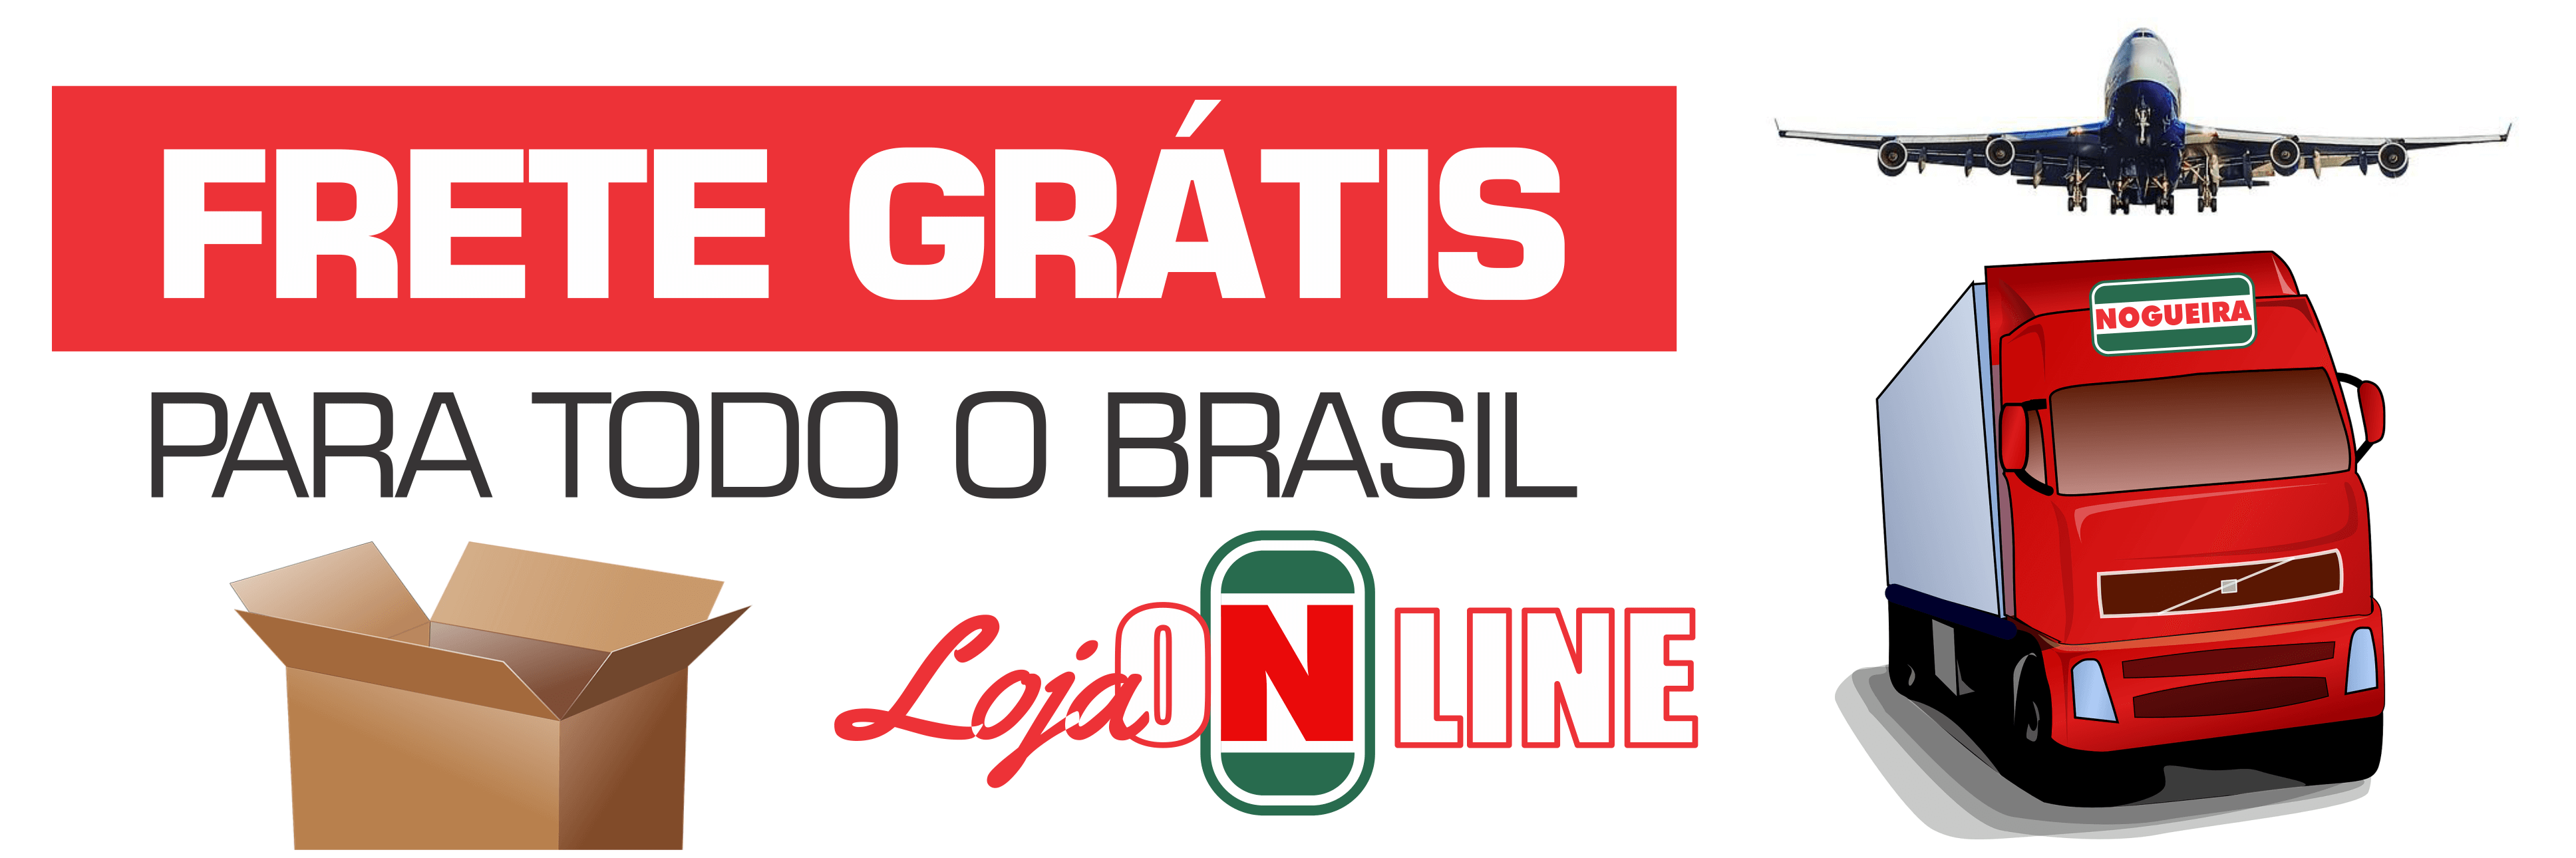 Banner - Loja Nogueira | Frete grátis para todo Brasil!